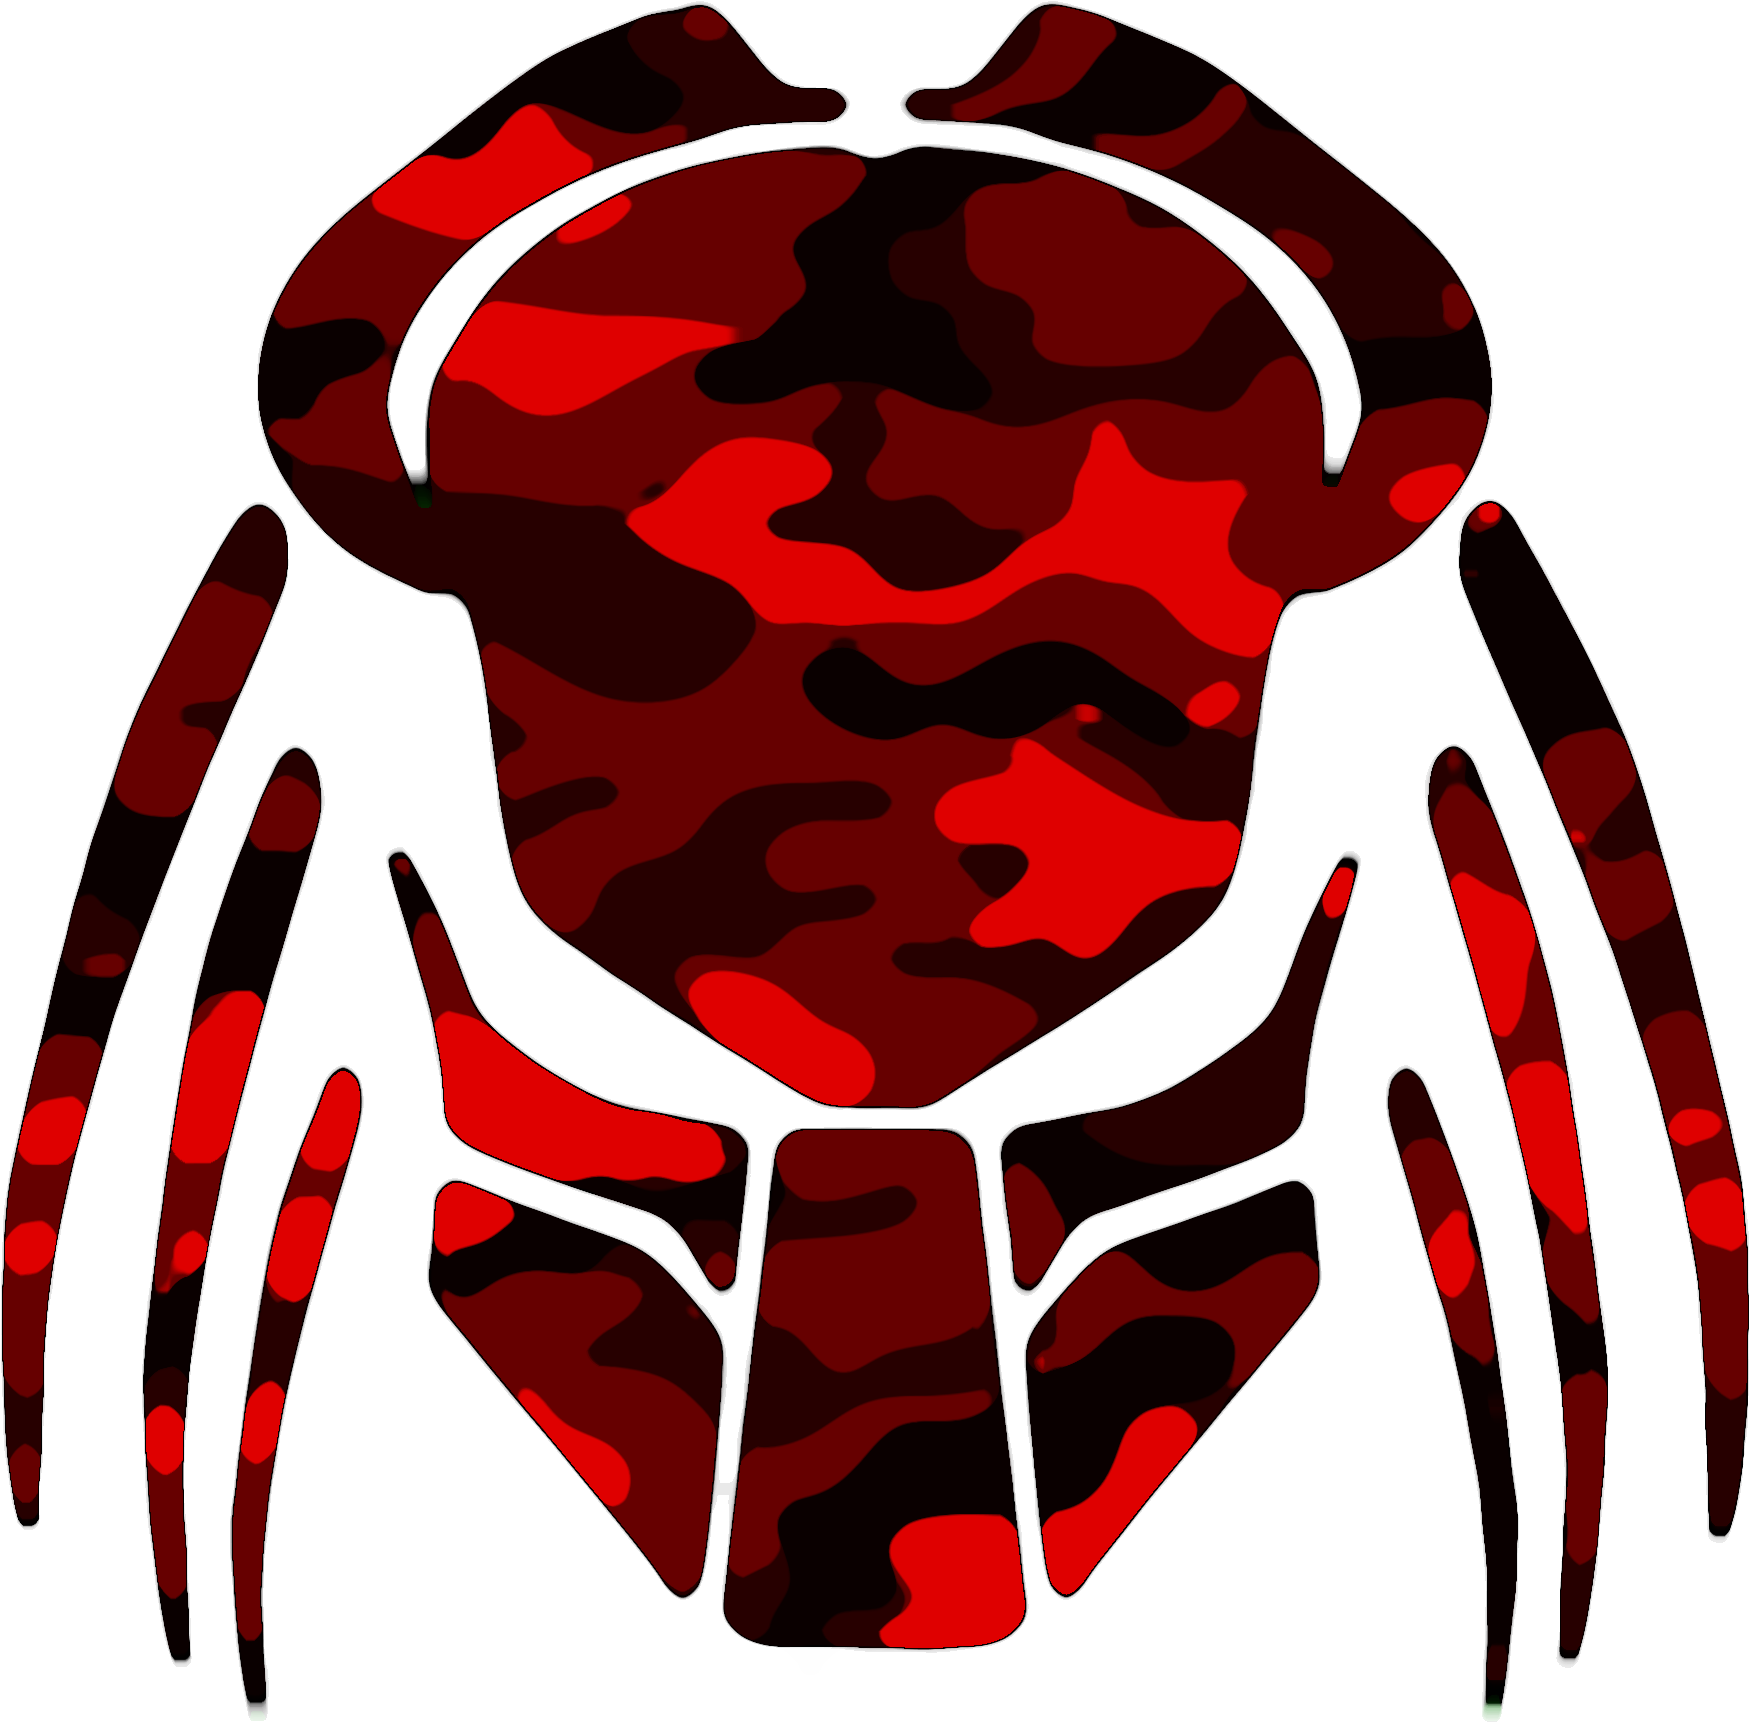 Cybergoth Cut Red Camo Image - Predator Tribal (2225x1946)